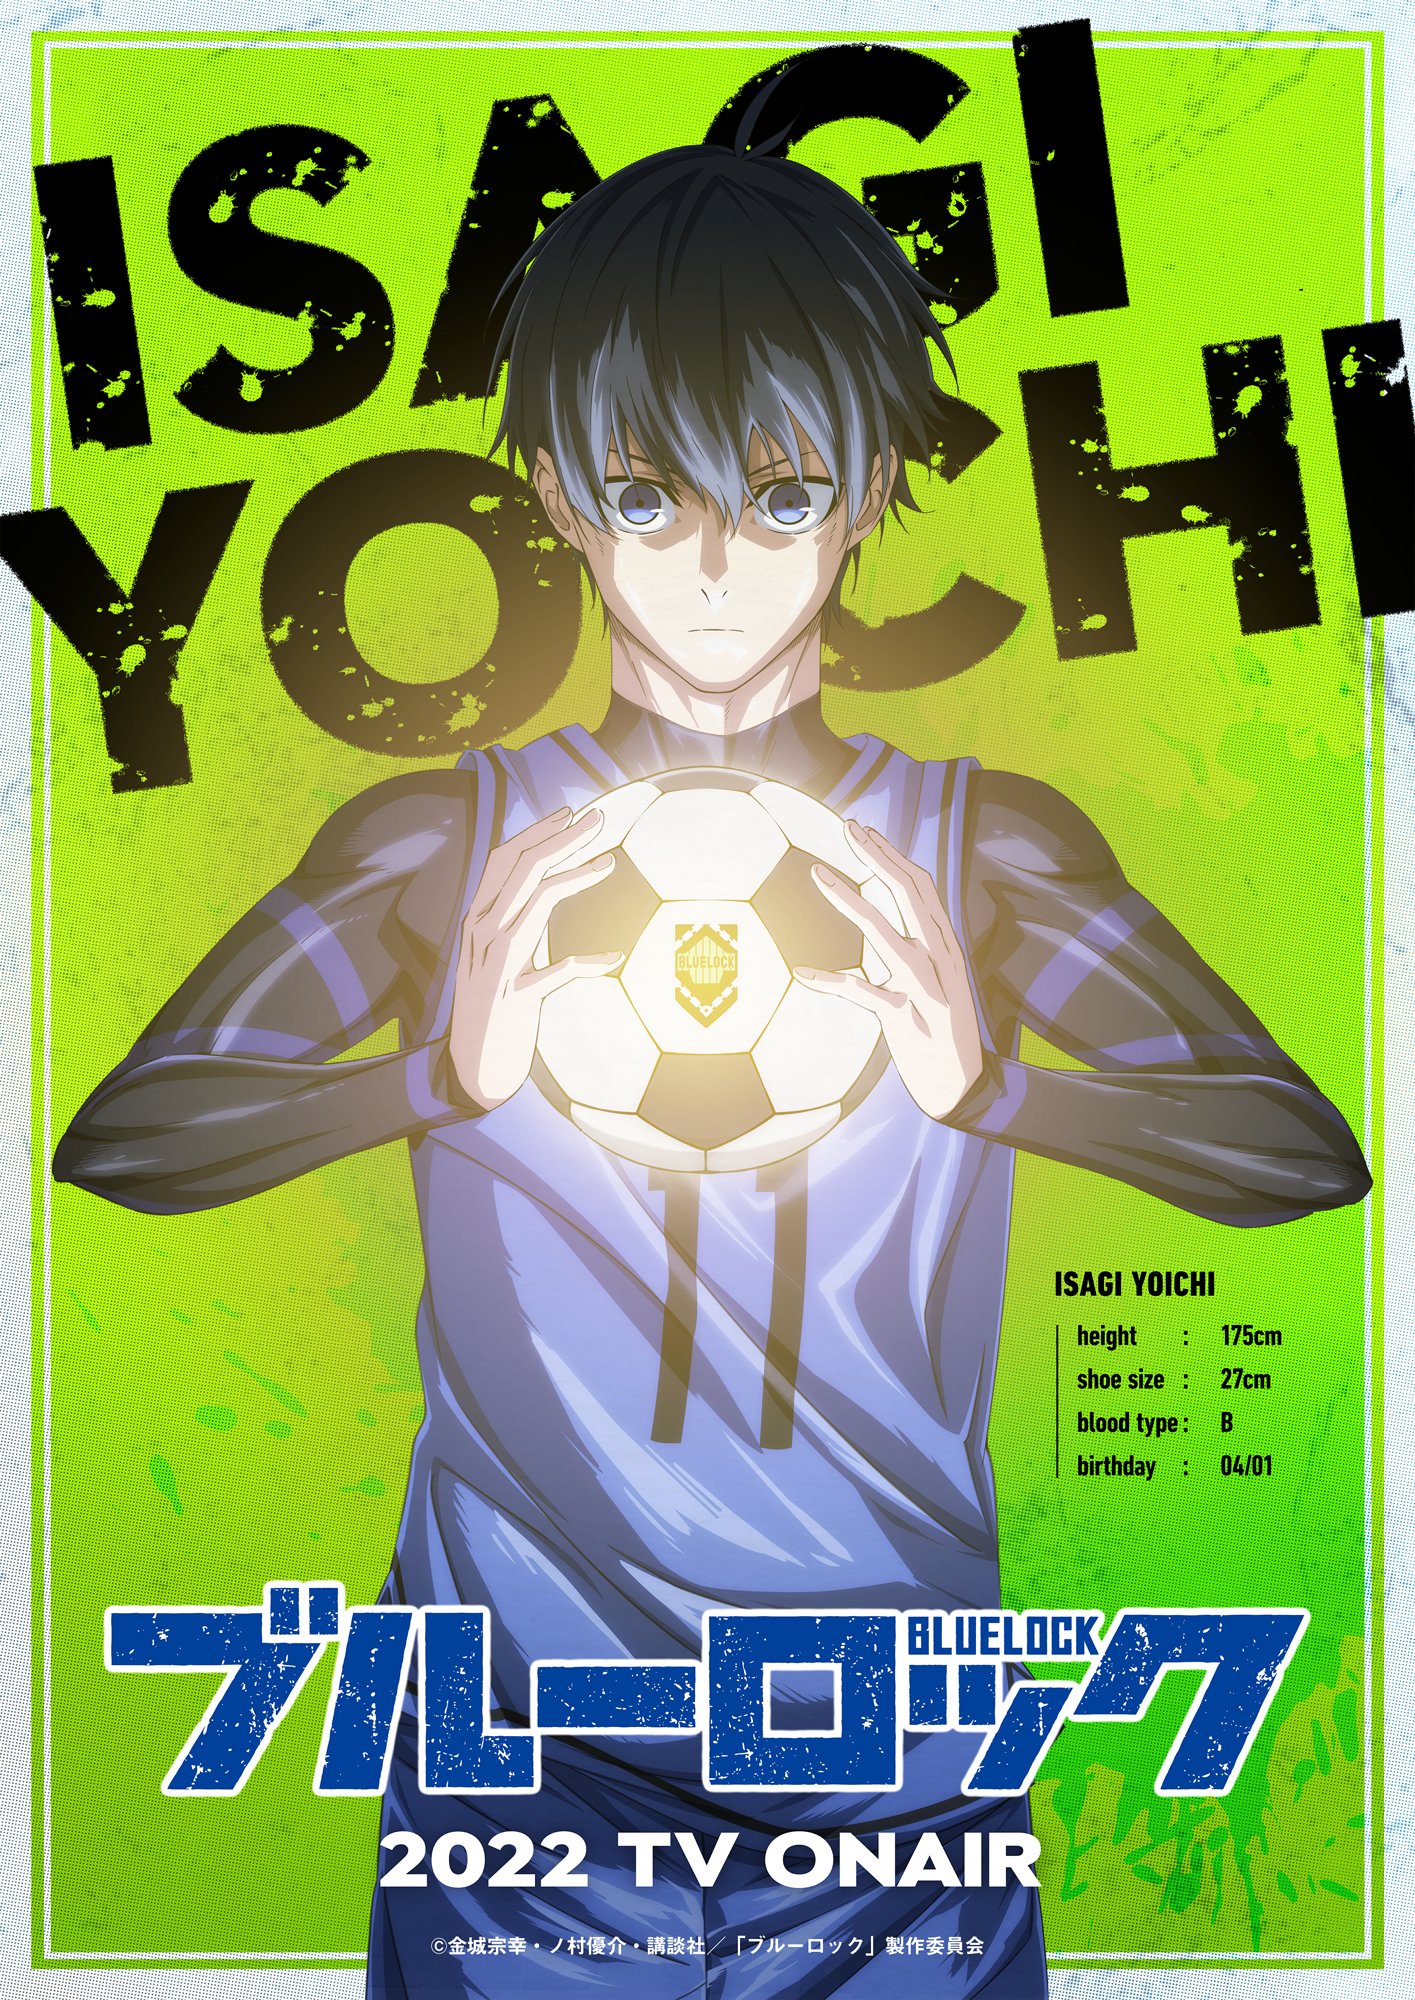 Crunchyroll Yoichi Shines in Character Visual for Blue Lock TV Anime